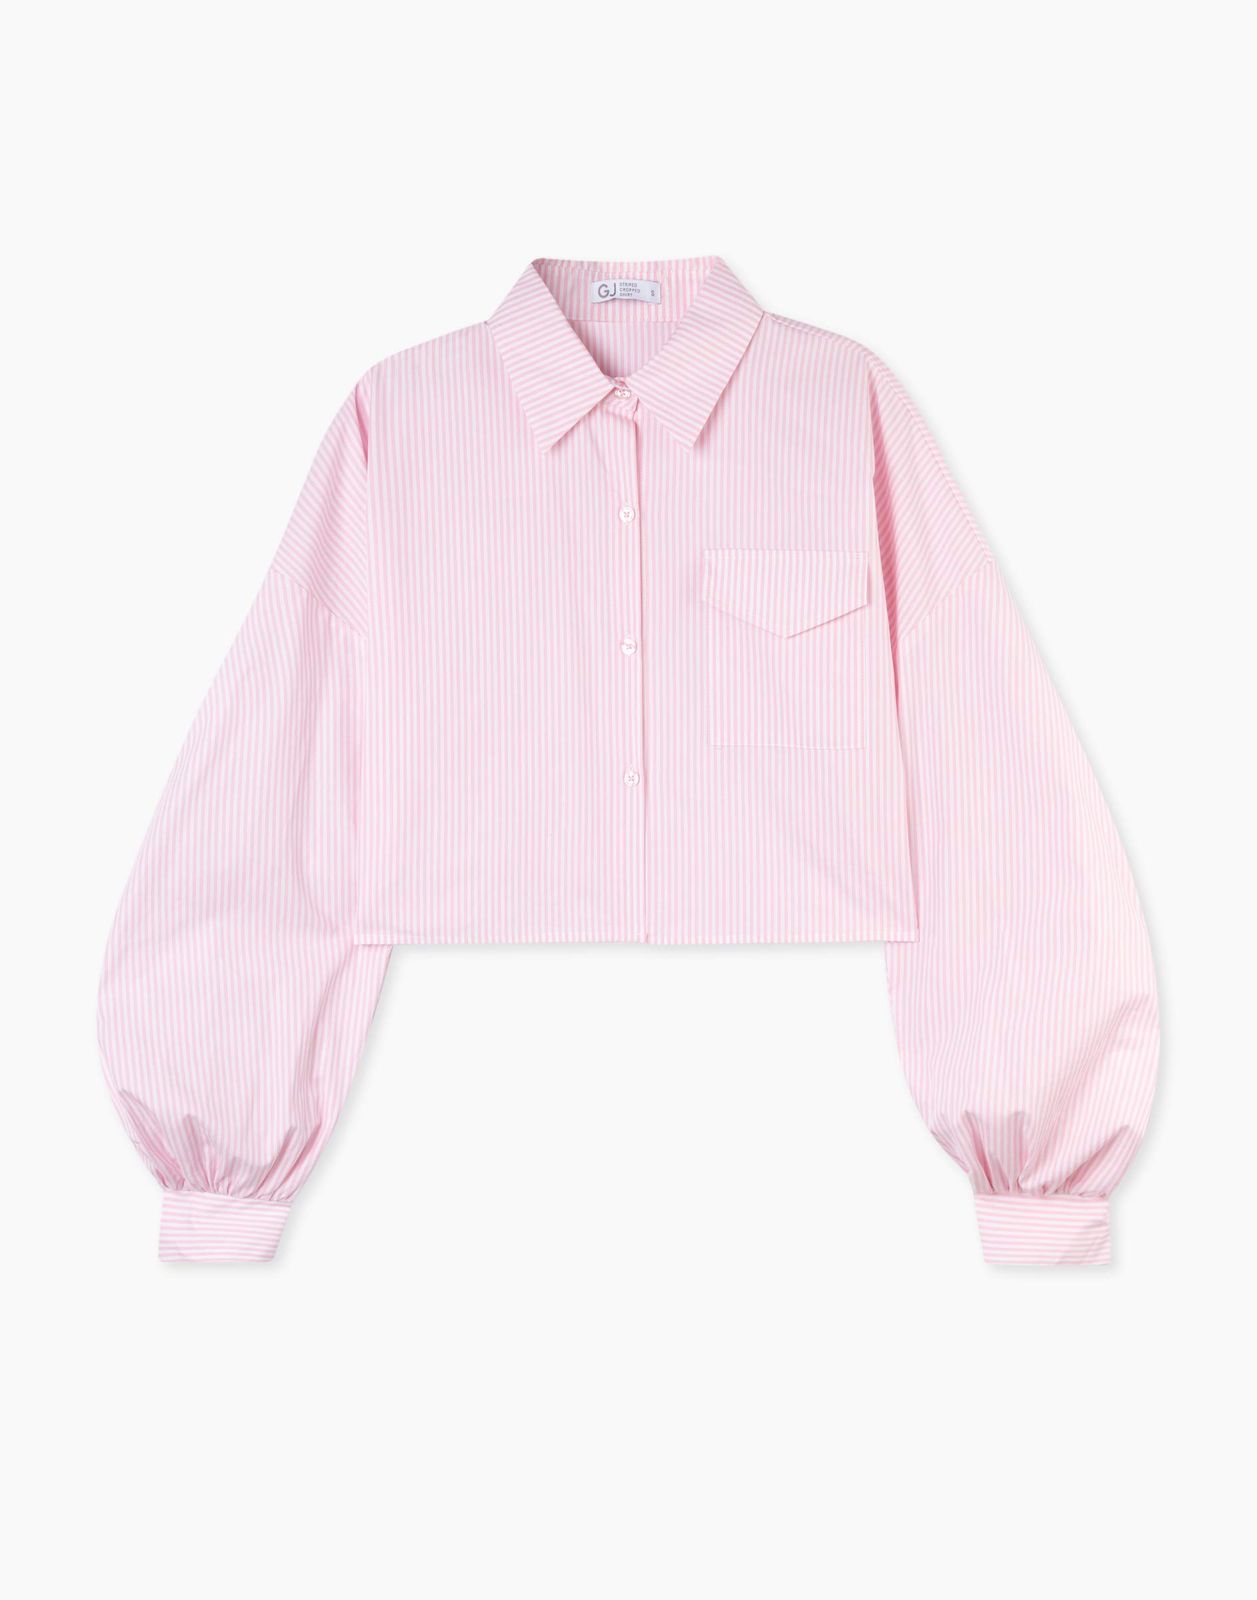 Рубашка женская Gloria Jeans GWT003971 белый/розовый S/170